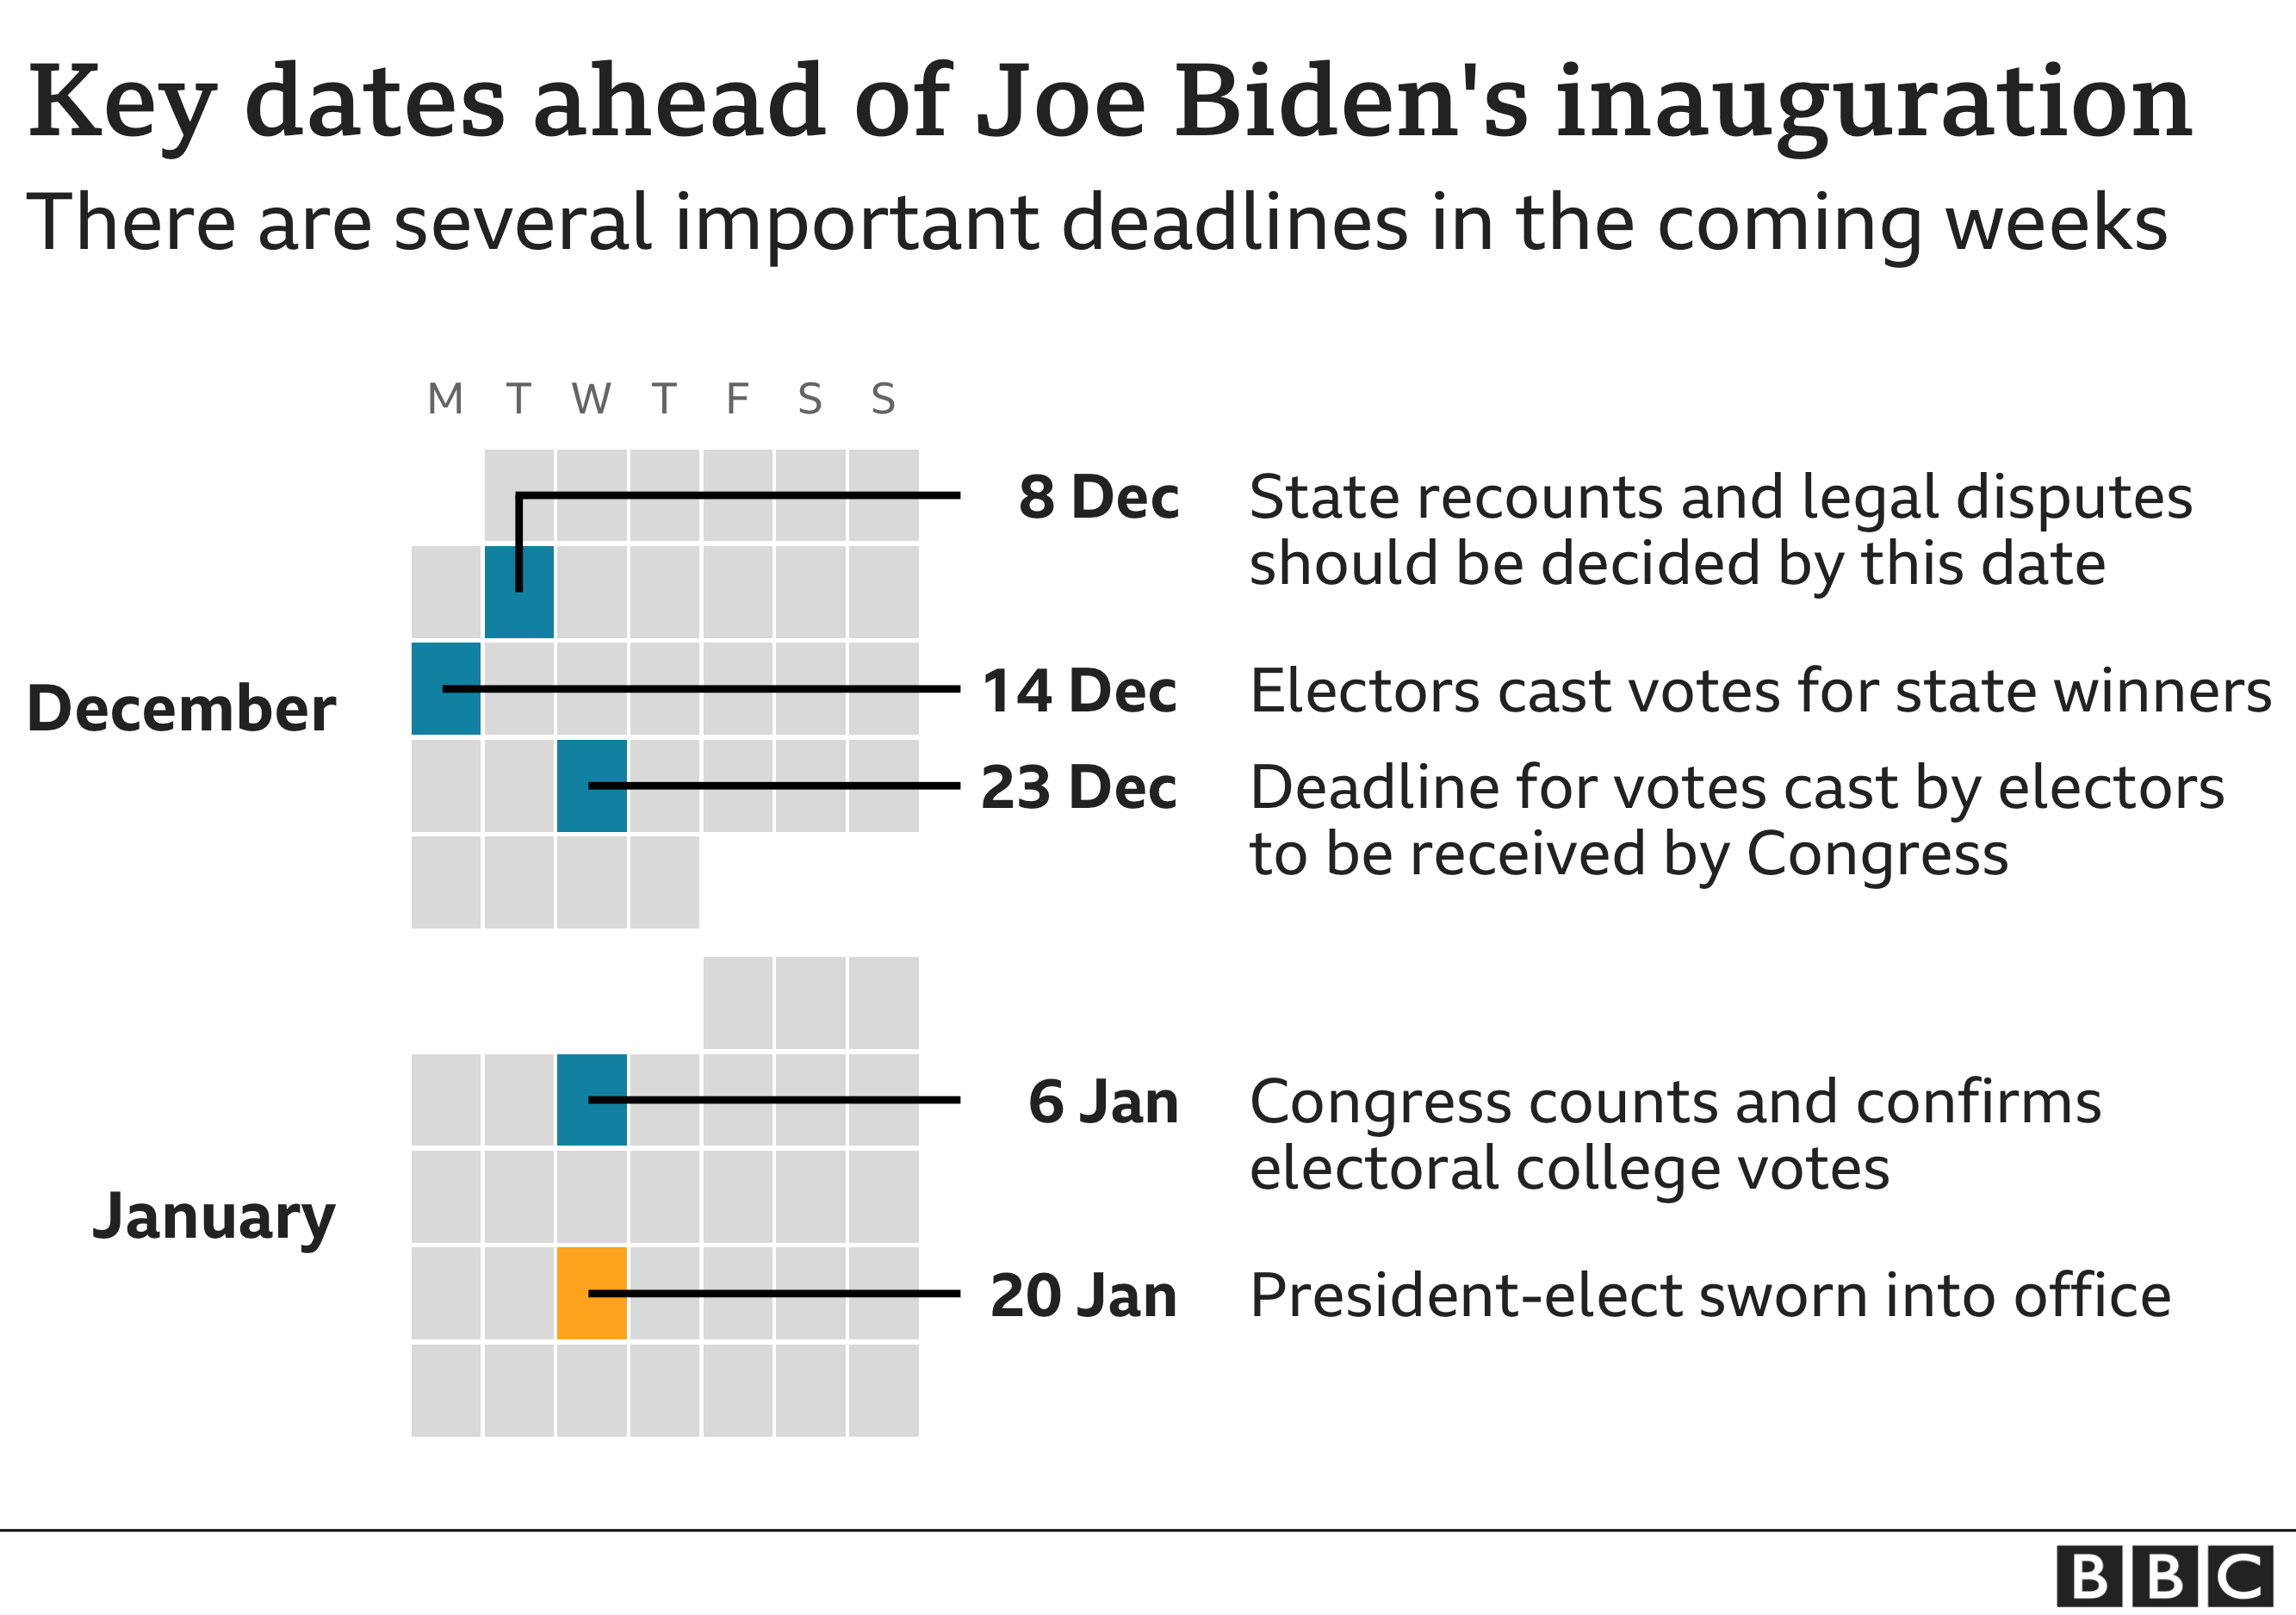 The key dates ahead of Joe Biden's inauguration